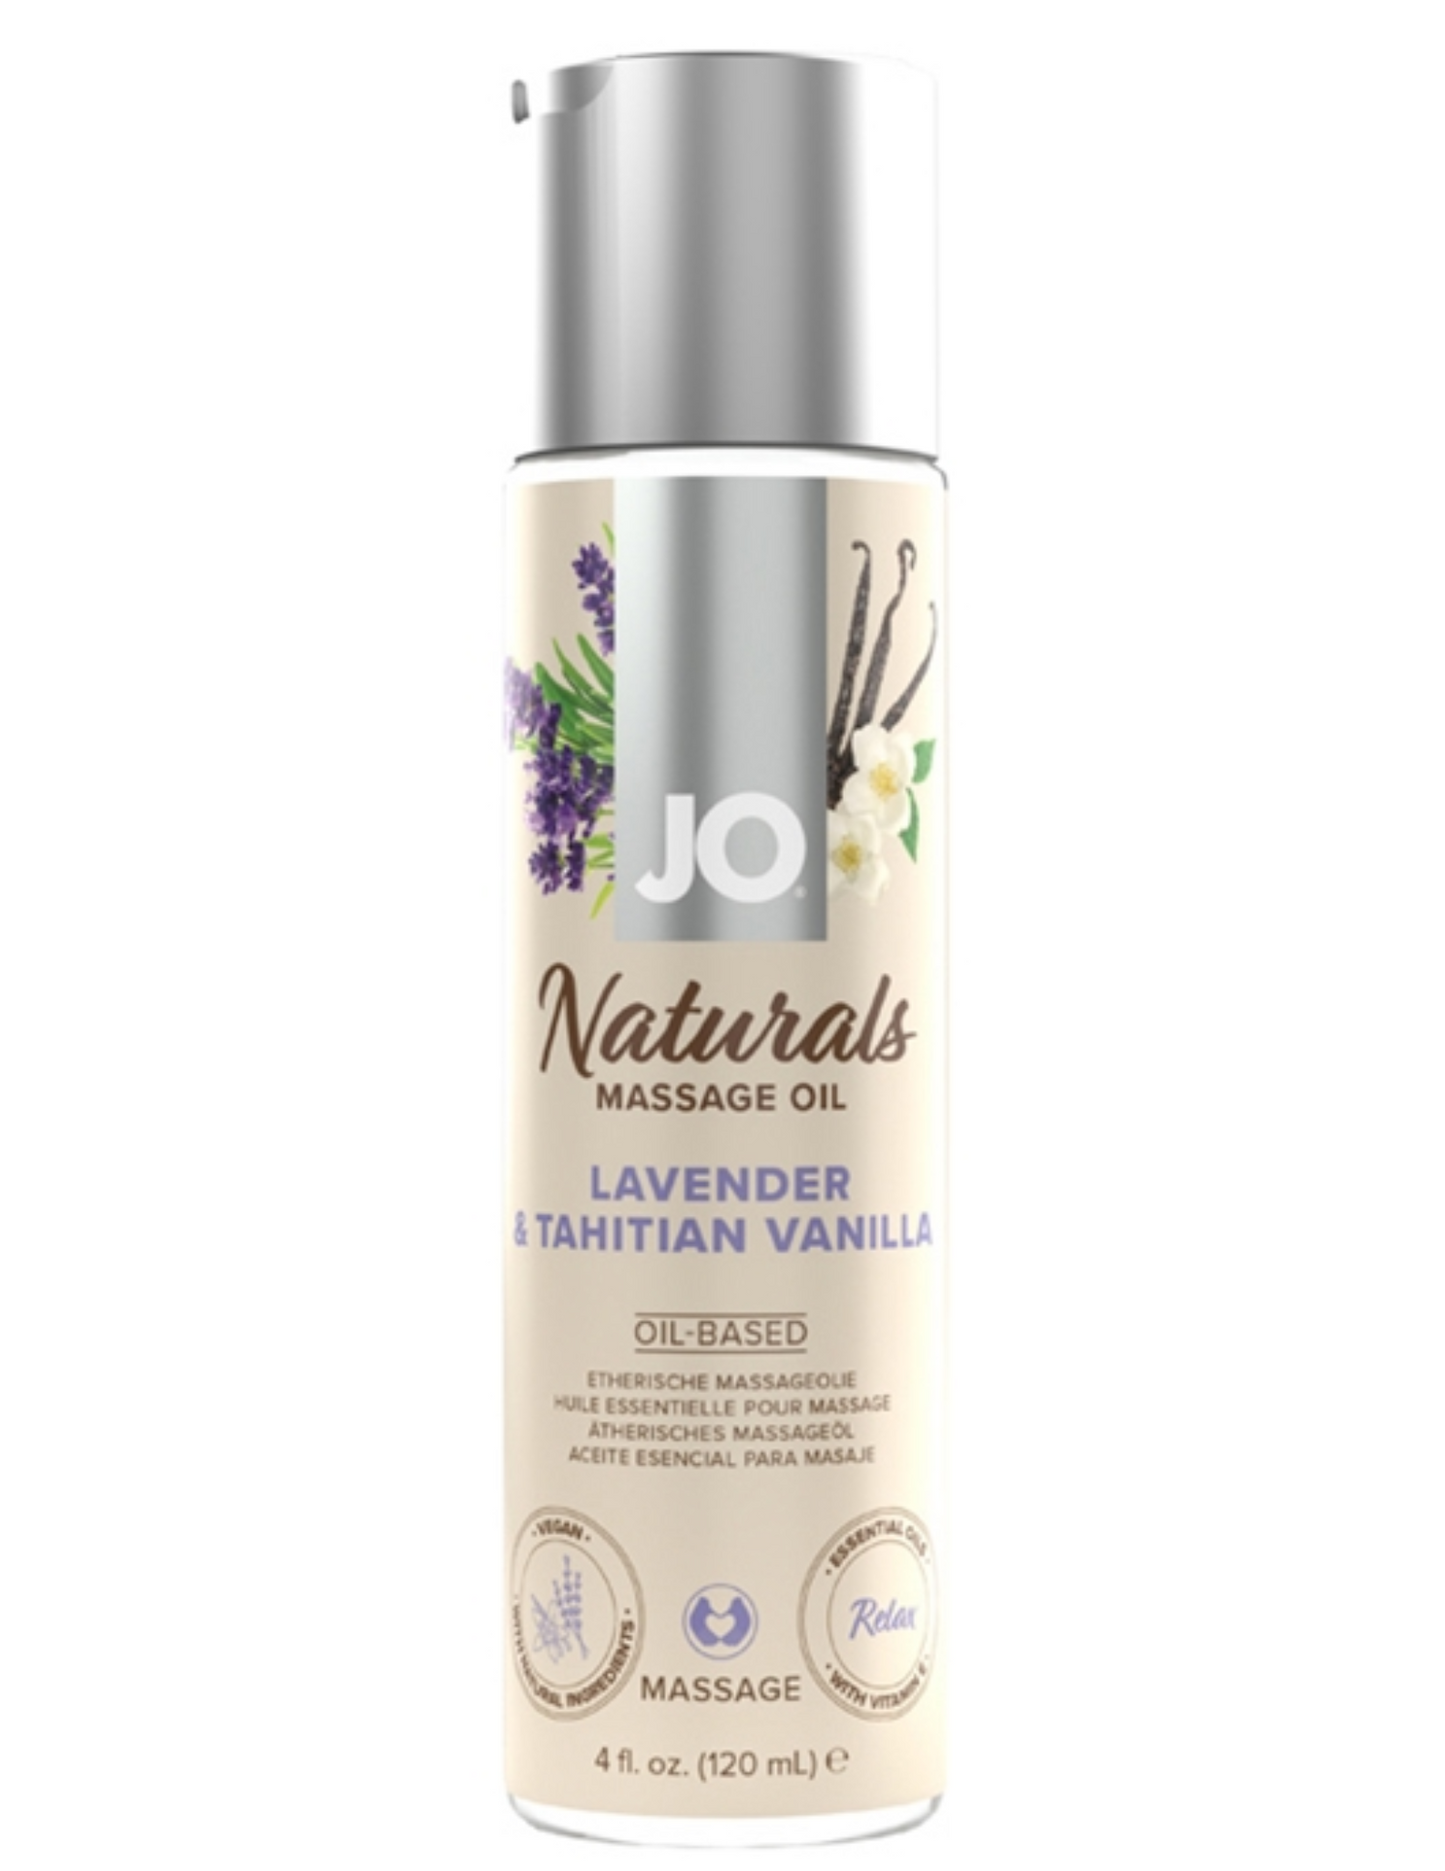 Jo Naturals Massage Oil Lavender and Tahitian Vanilla 4oz bottle.